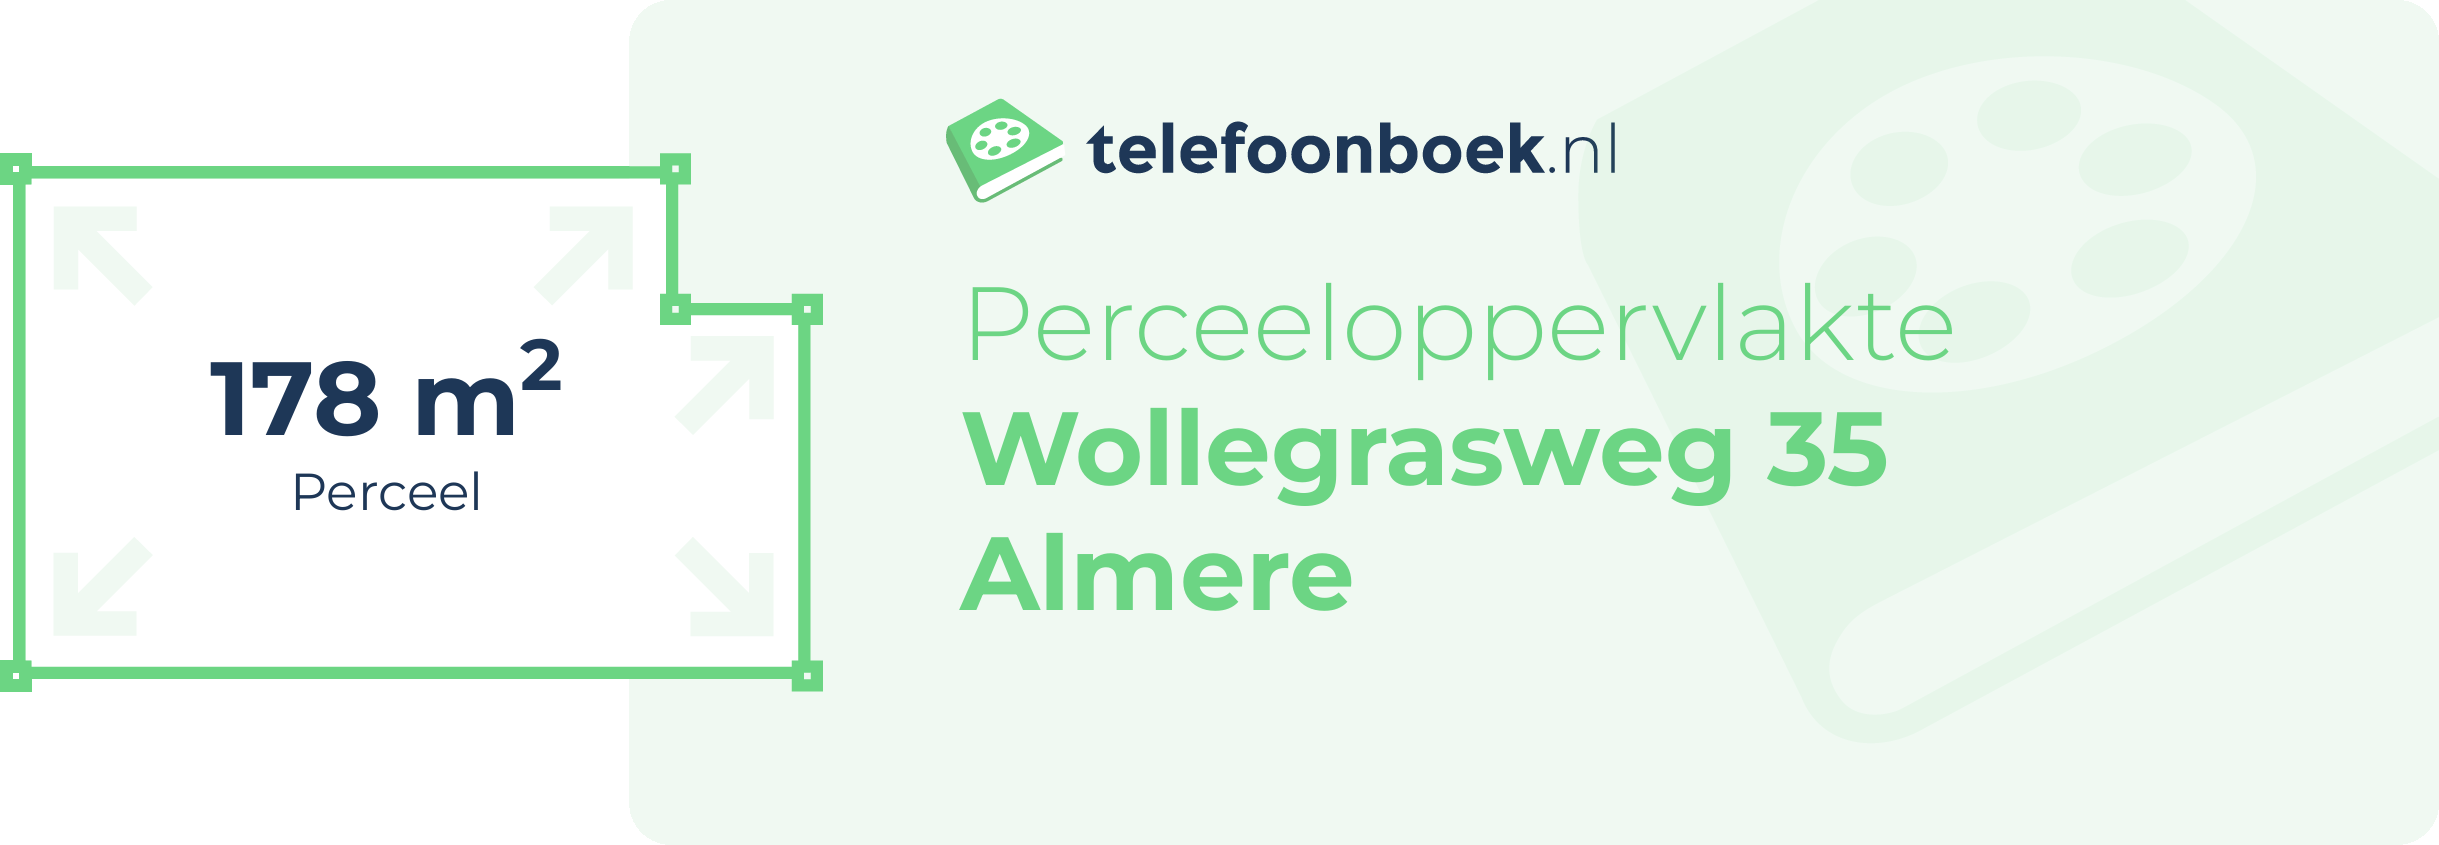 Perceeloppervlakte Wollegrasweg 35 Almere